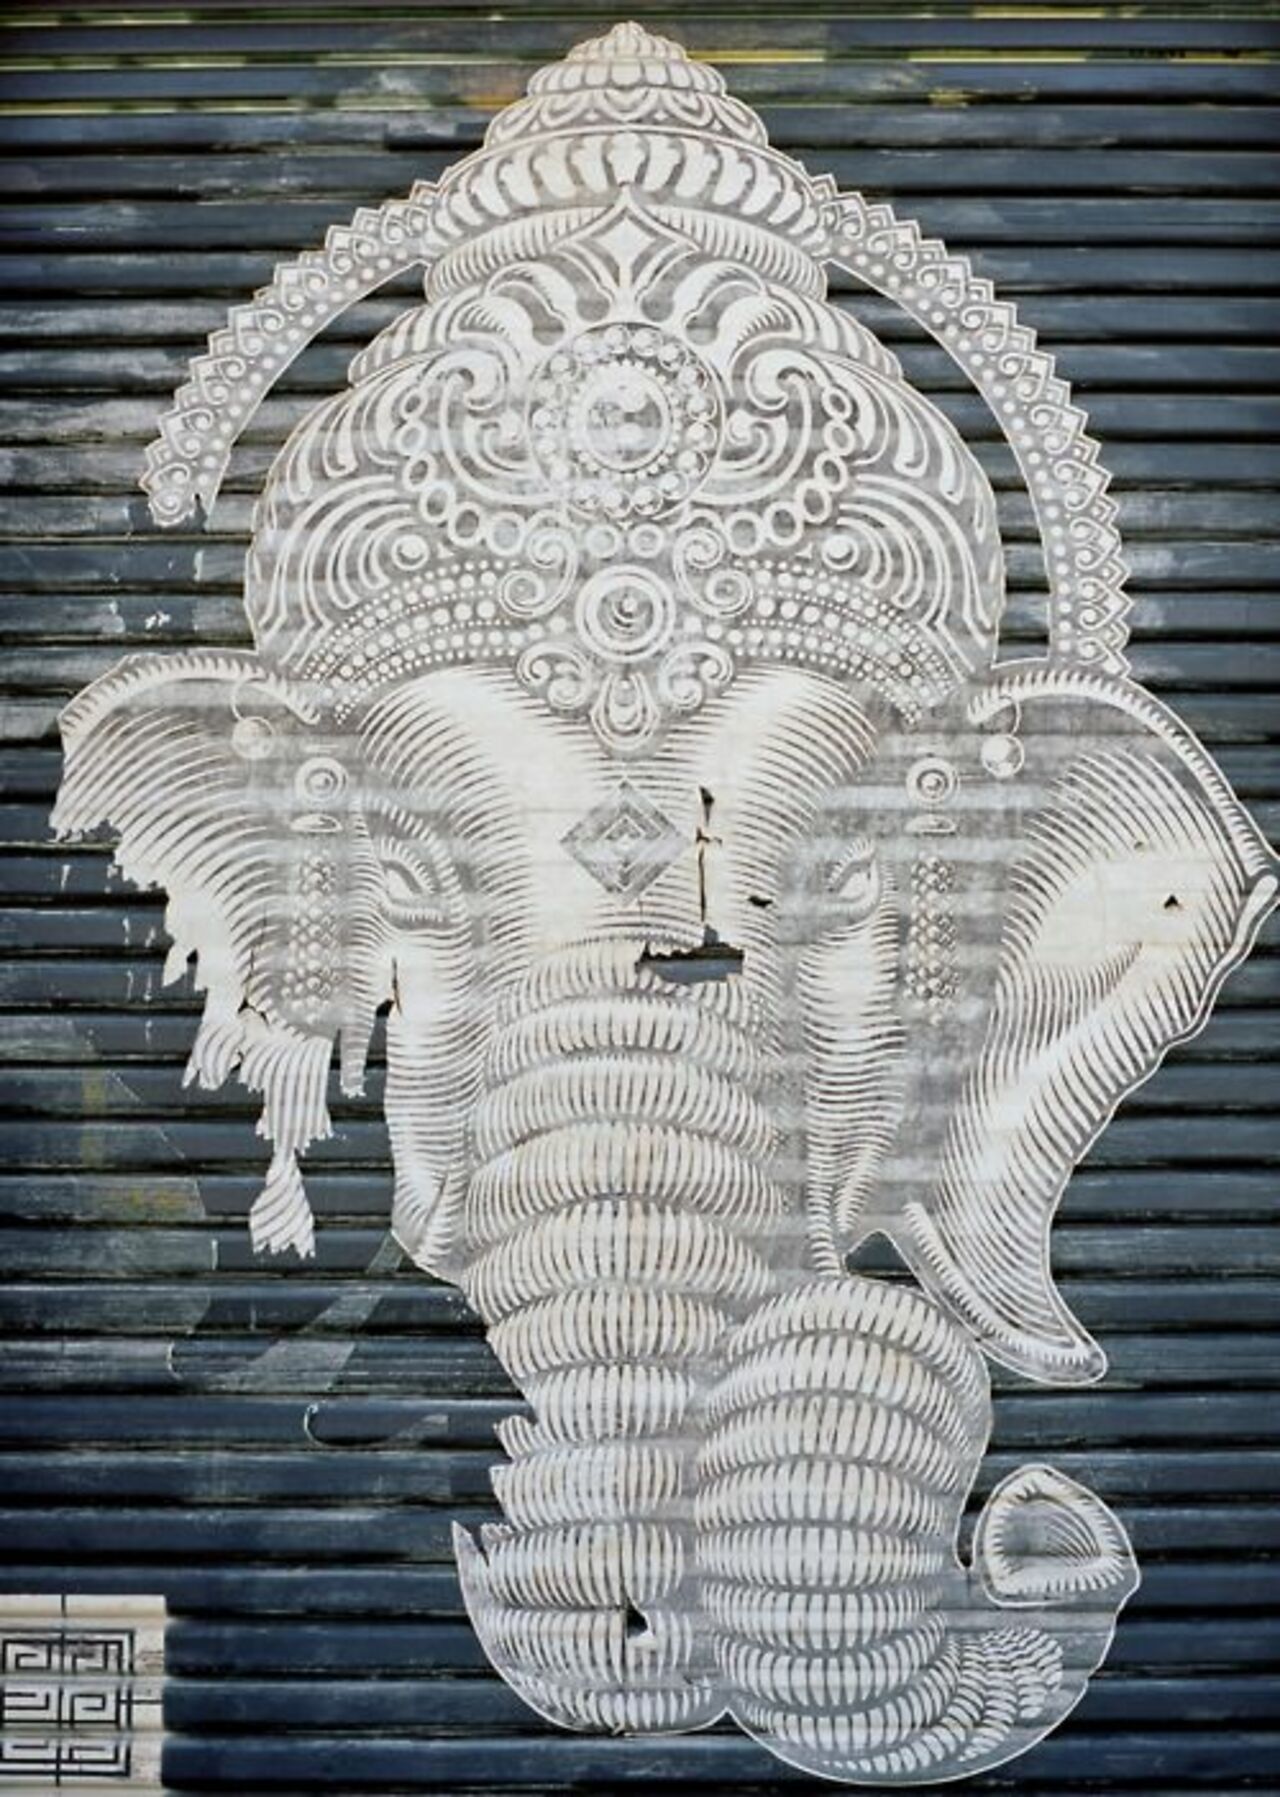 Funky in India  •  #streetart #graffiti #art #india #funky #dope . : http://t.co/sXBnntVidQ